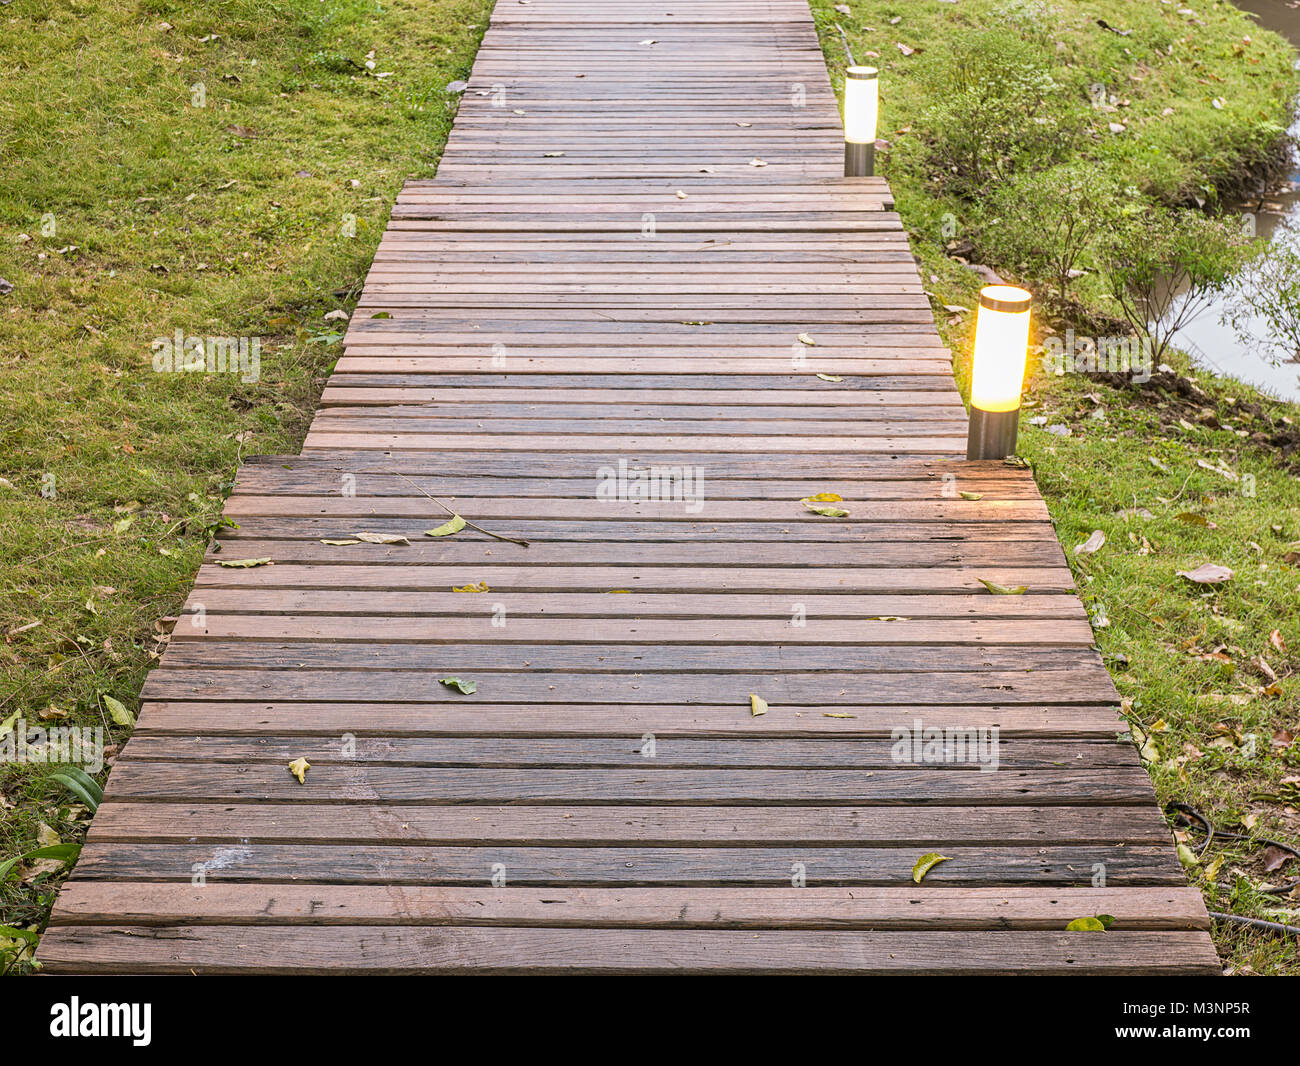 Laternen Beleuchtung in den Holz- Bahn, Park oder Garten Dekoration Design Stockfoto